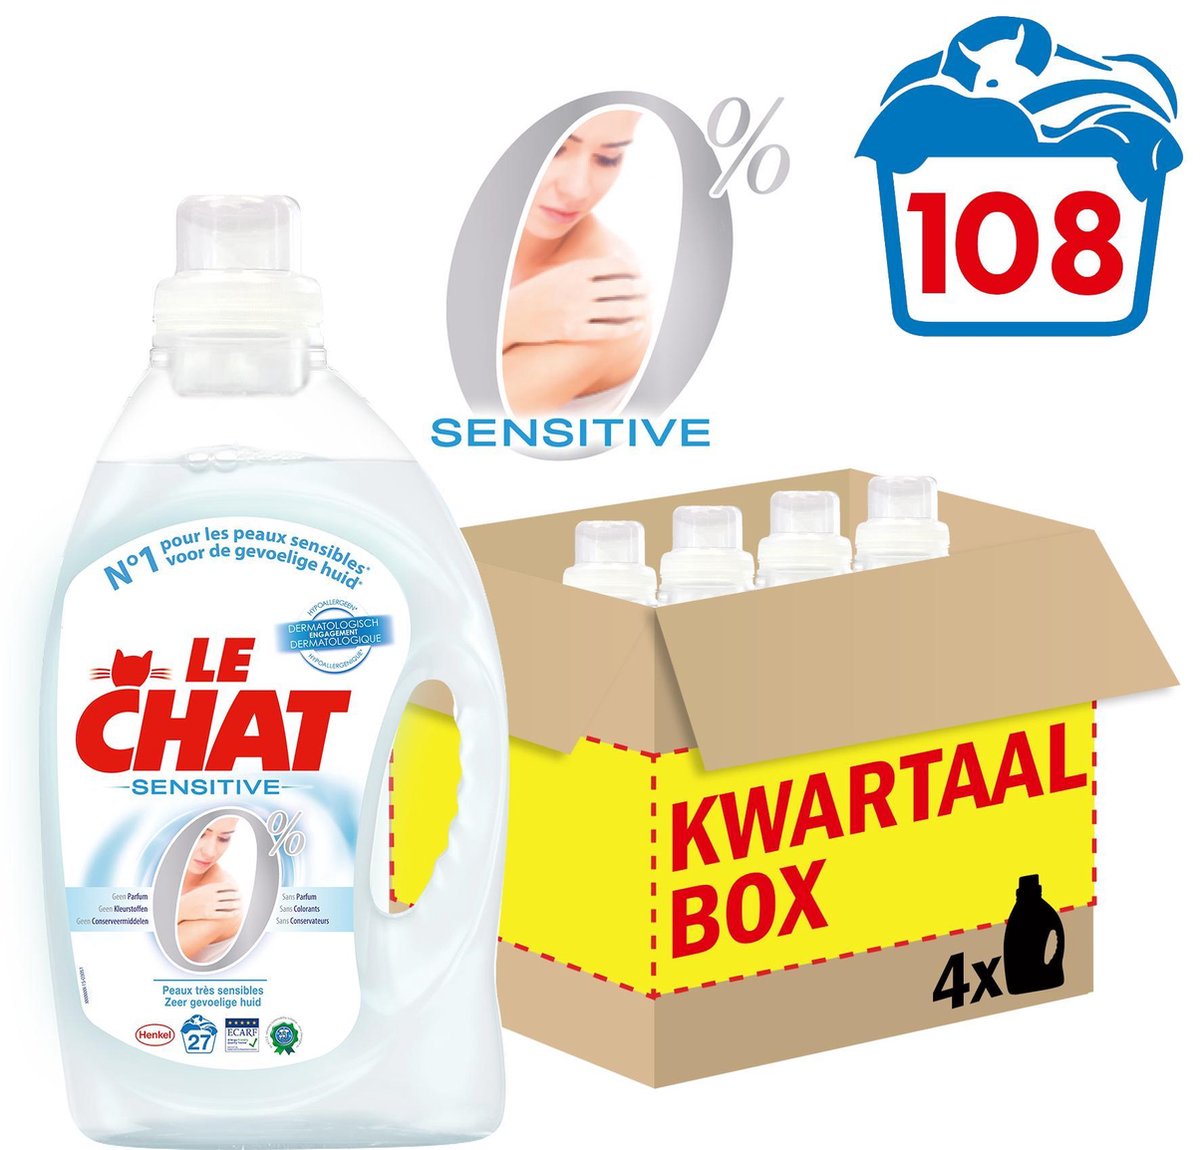 Le Chat Gel Sensitive 0% - Kwartaalverpakking - 108 wasbeurten - Wasmiddel